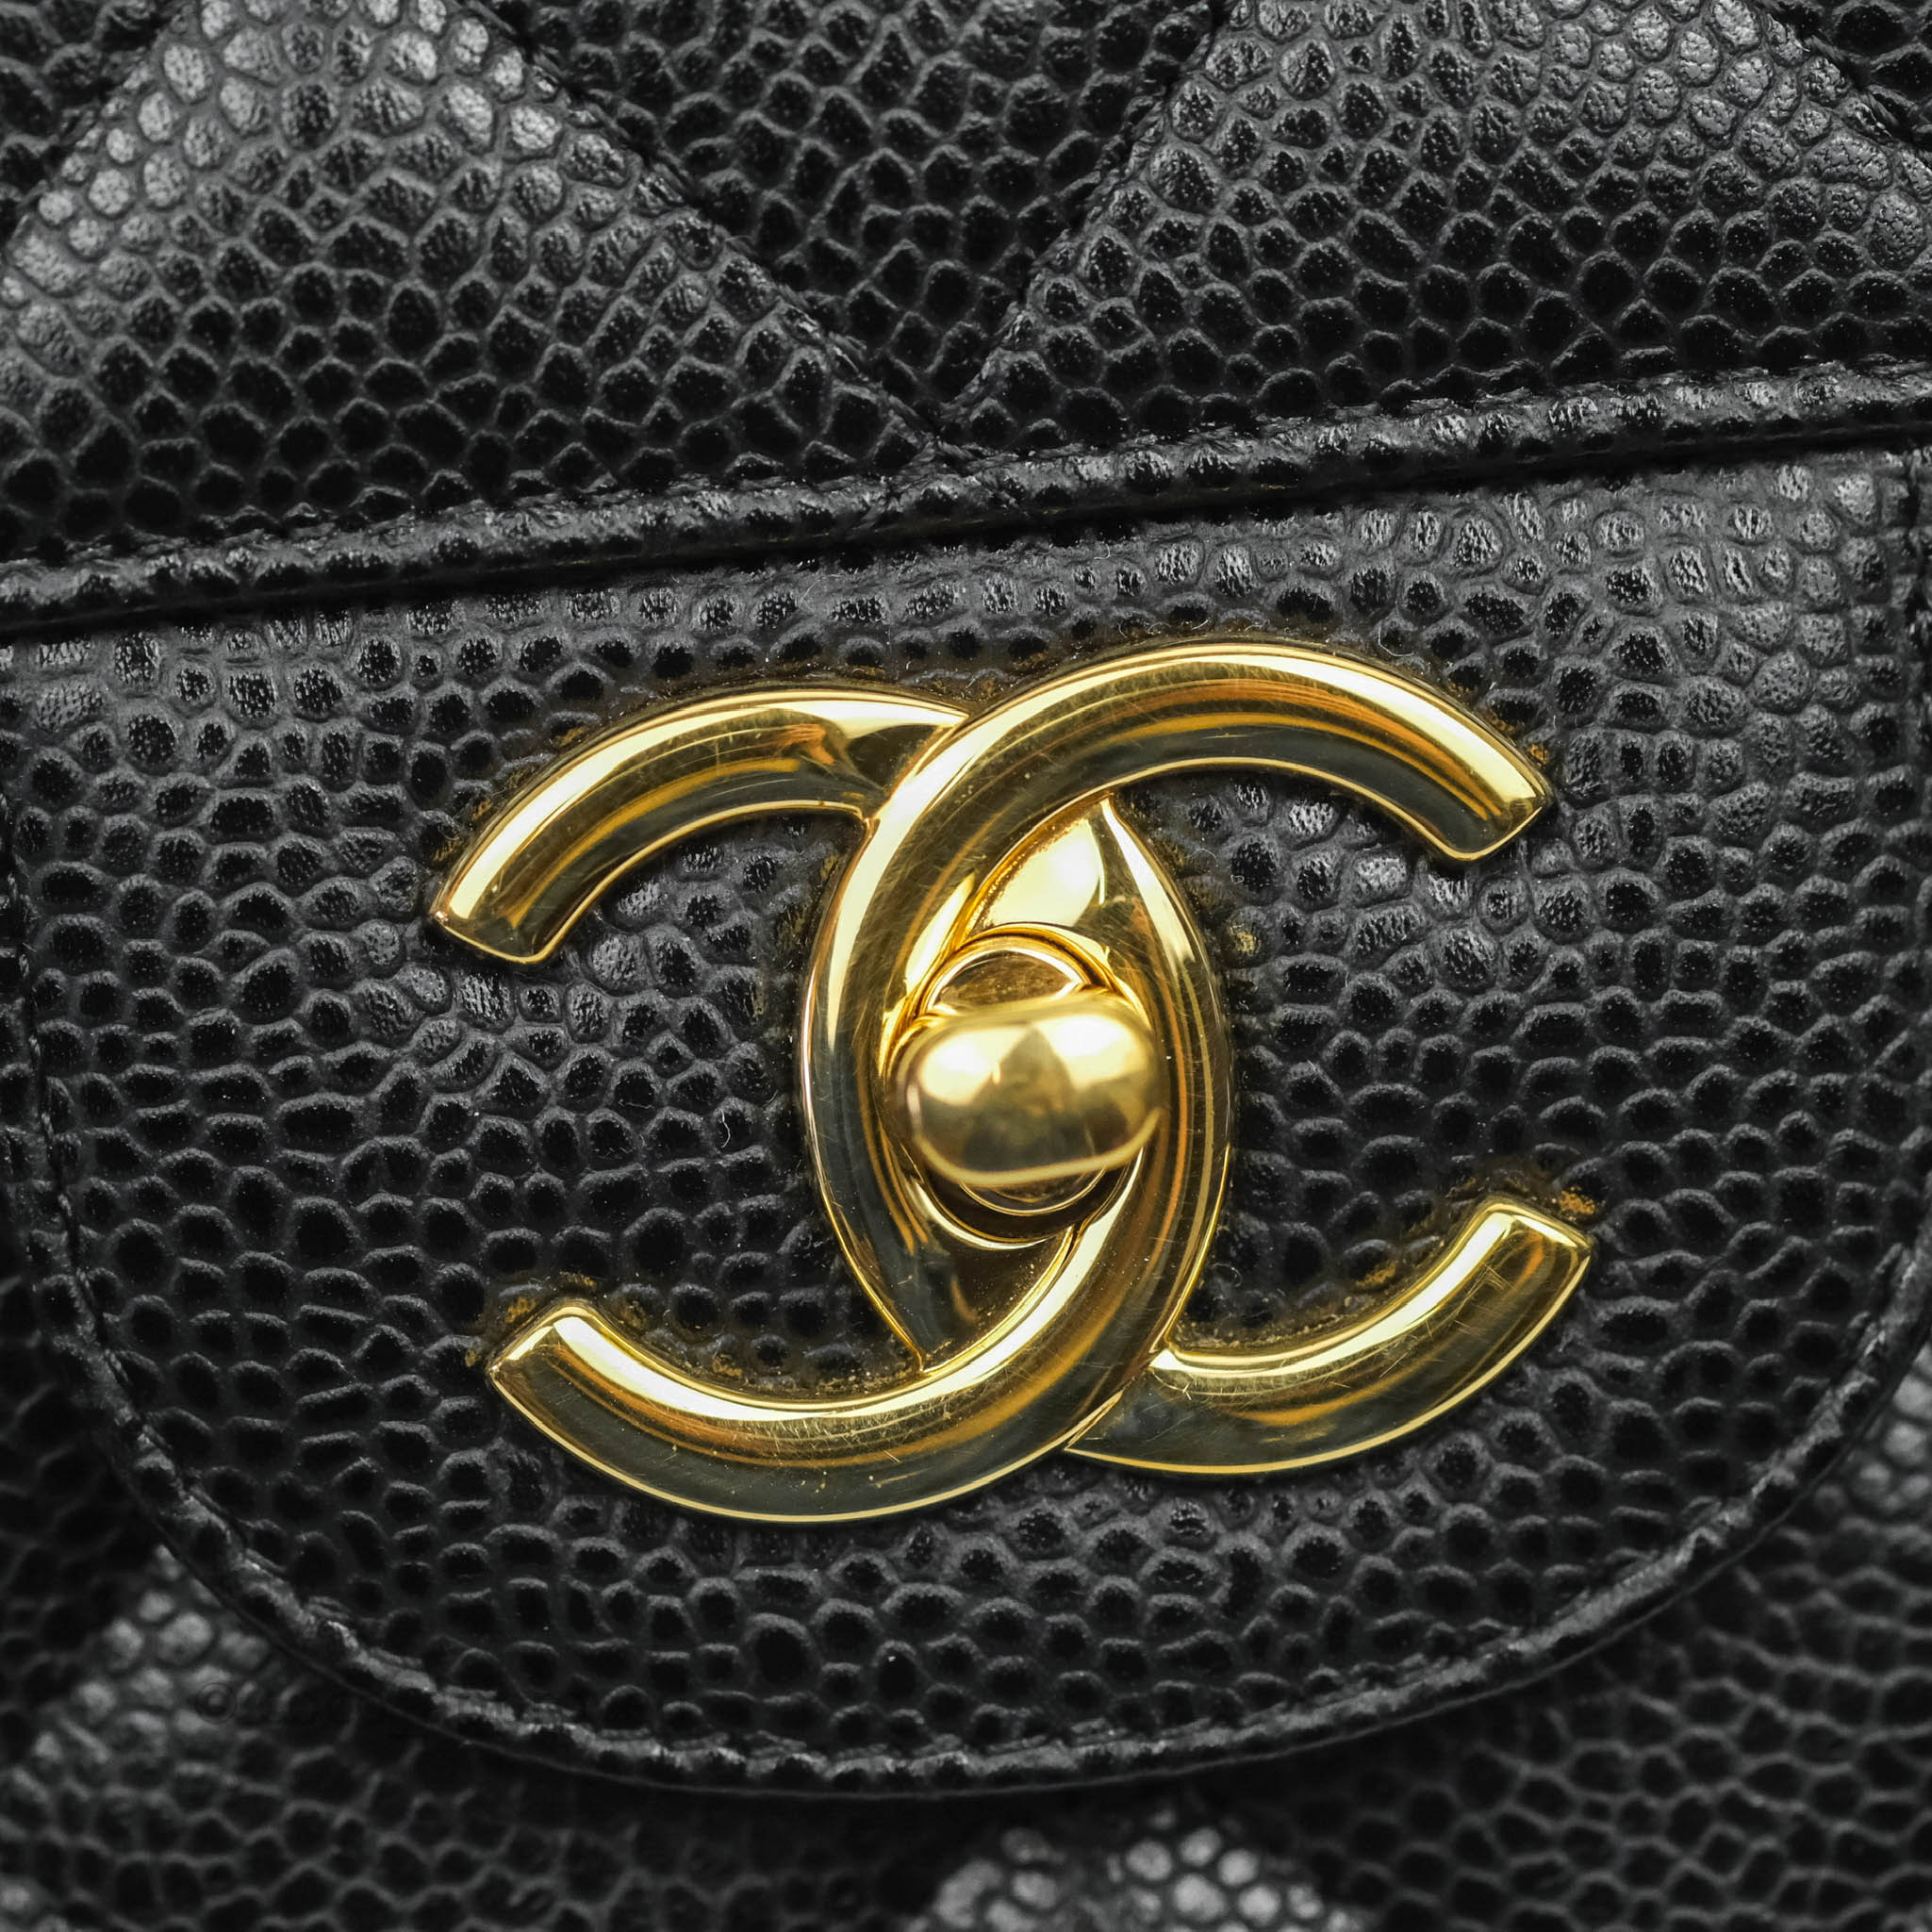 Chanel Classic Double Flap Maxi Black Caviar Gold Hardware – Coco Approved  Studio